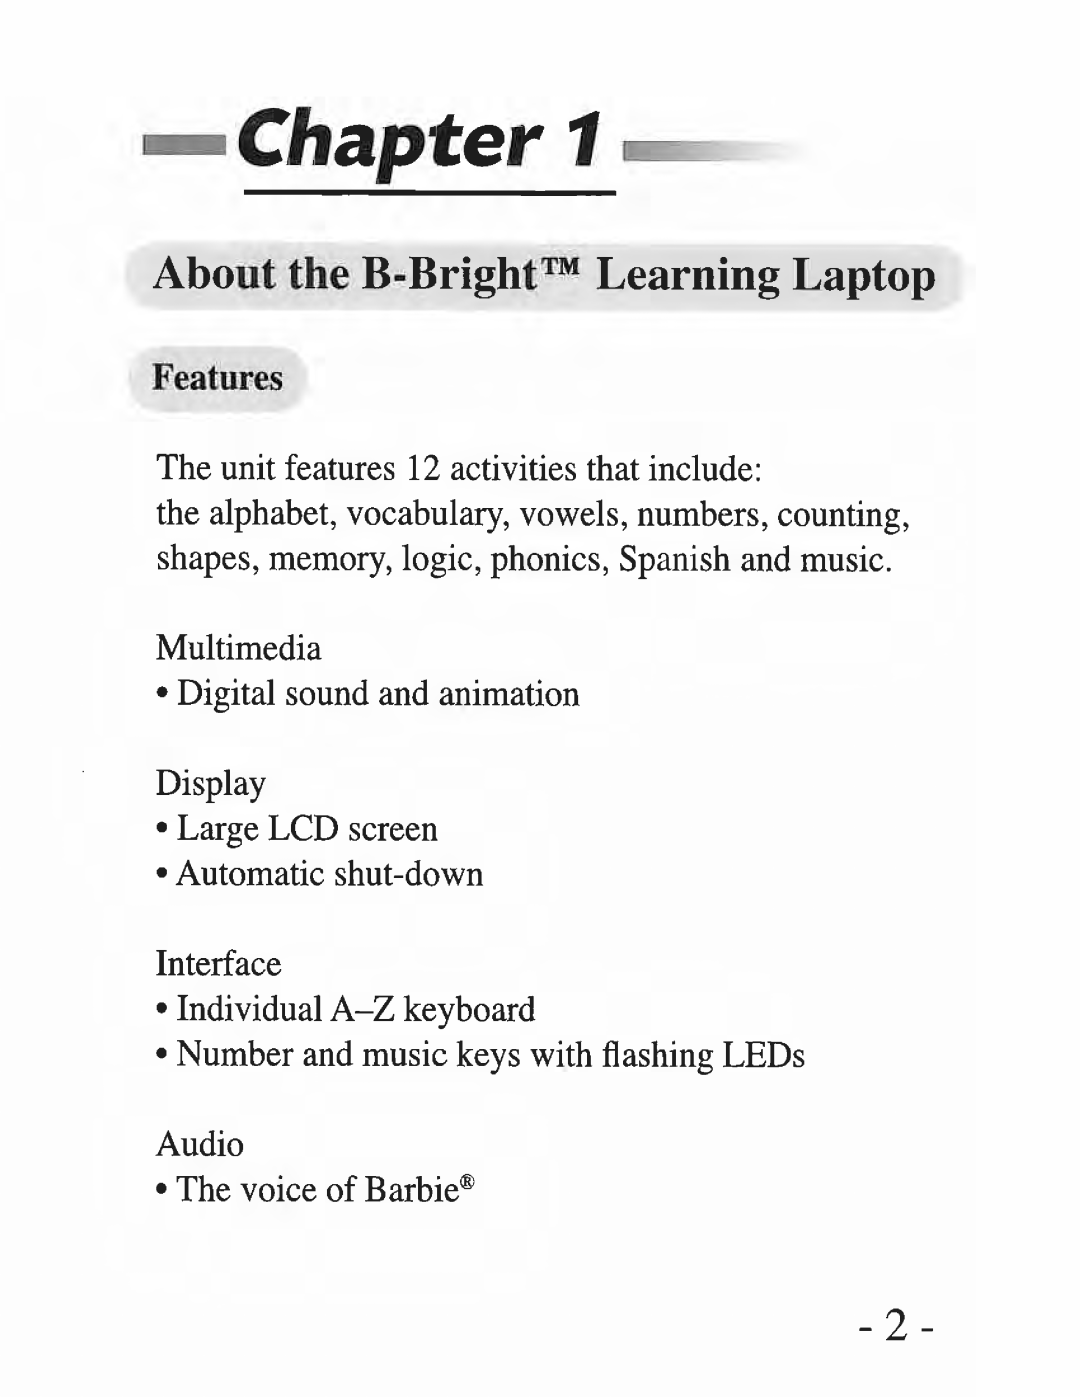 Oregon Scientific Barbie B-Brite Learning Laptop, 300102544-00001-10 manual 